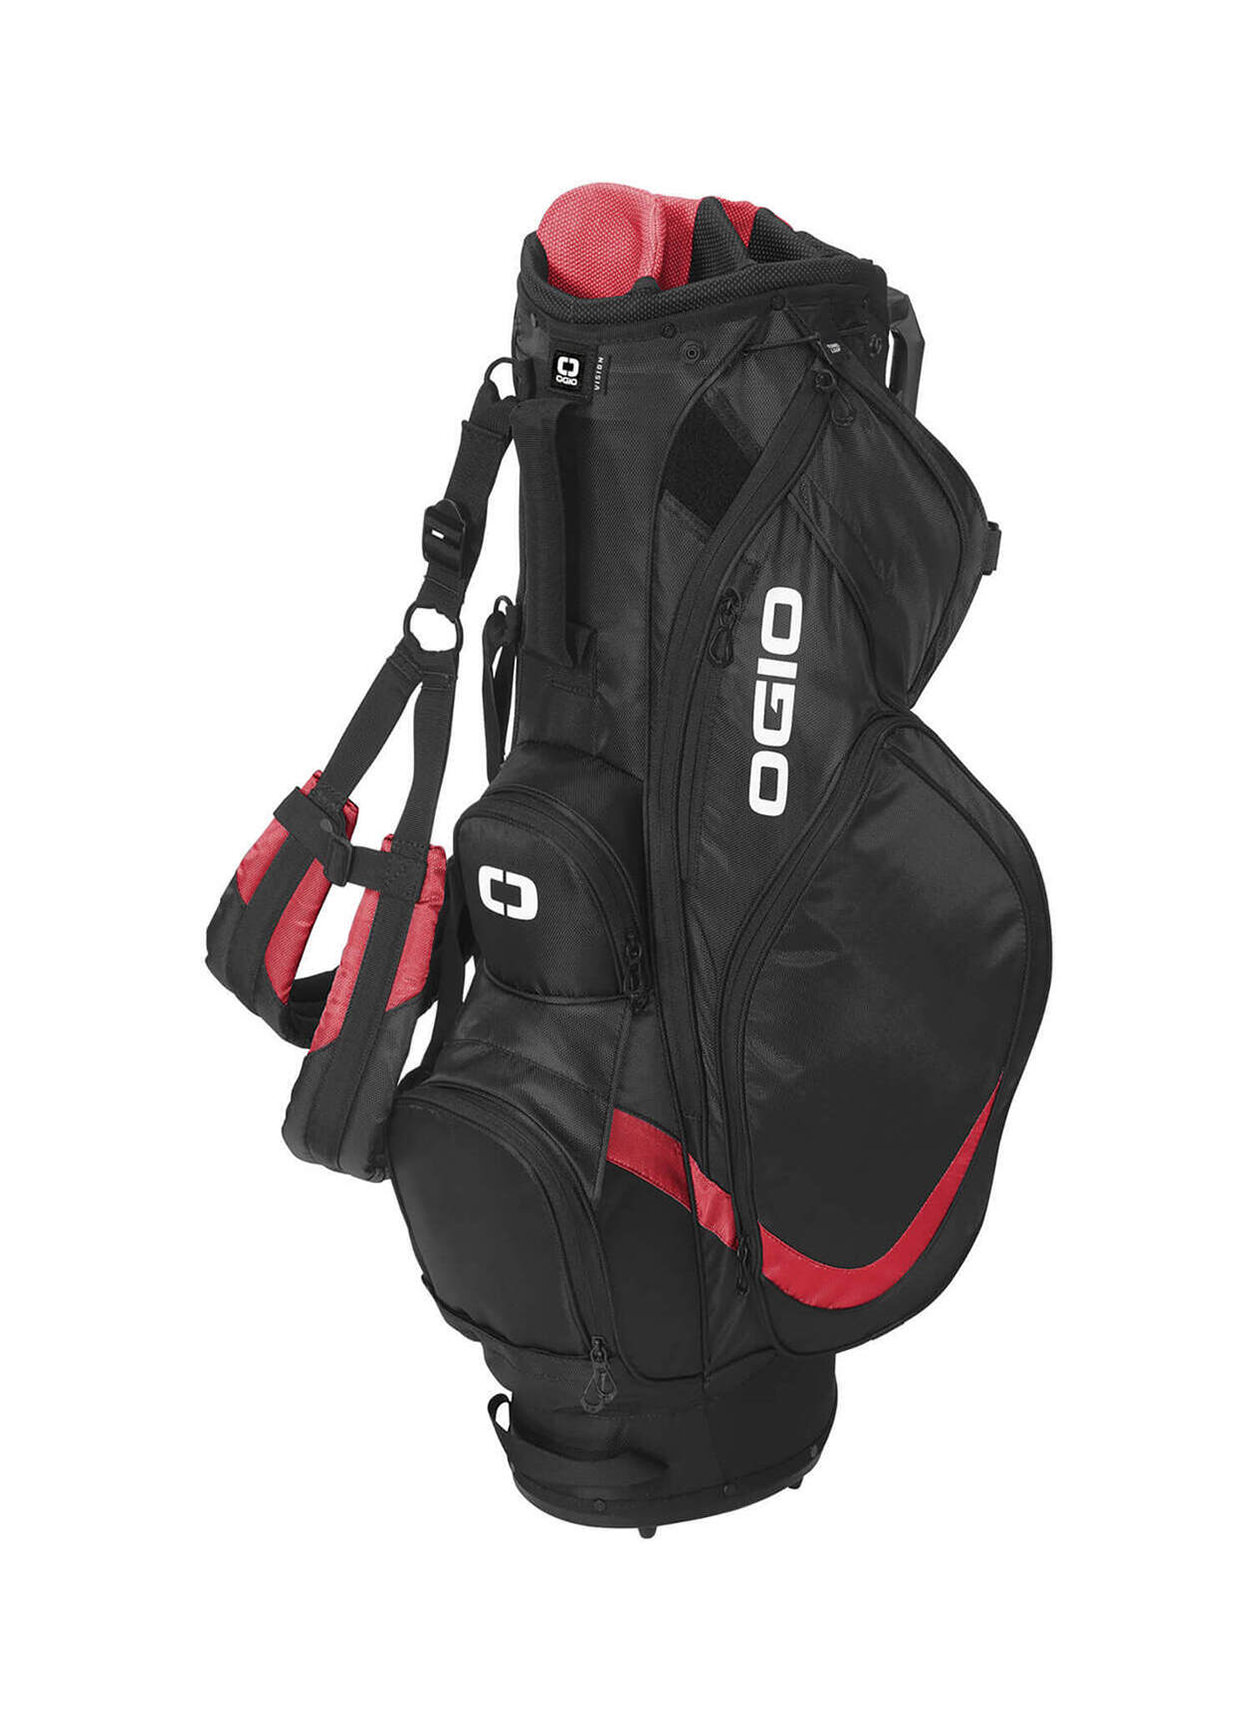 OGIO Vision 2.0 Golf Bag Black / Red OGIO